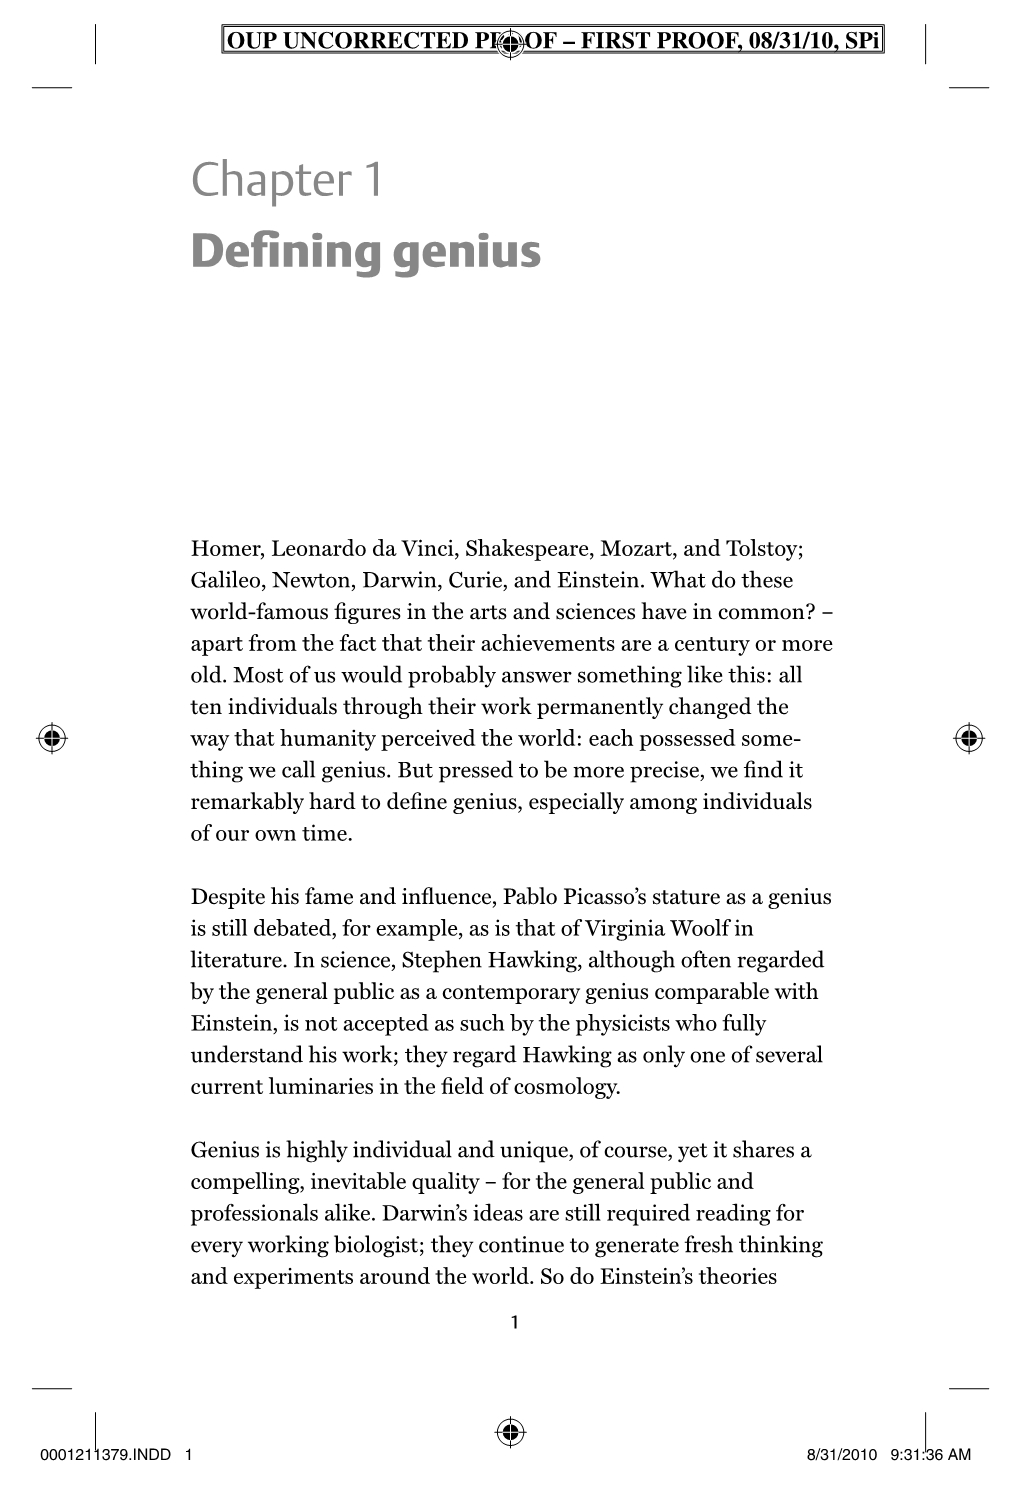 Chapter 1 Defining Genius